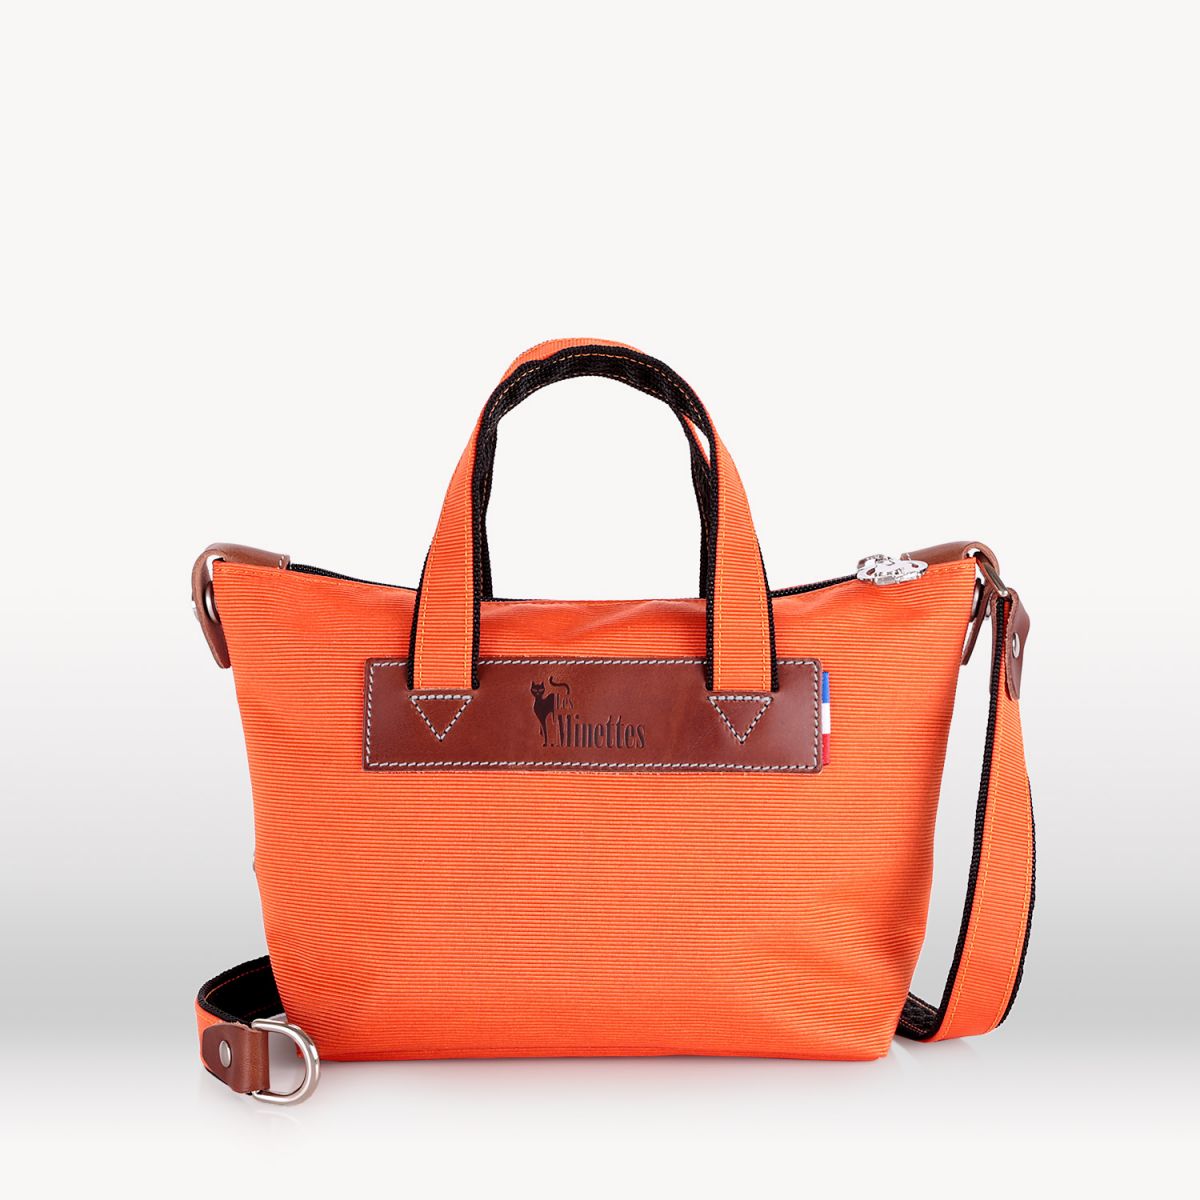 28cm handbag Orange/Tobacco